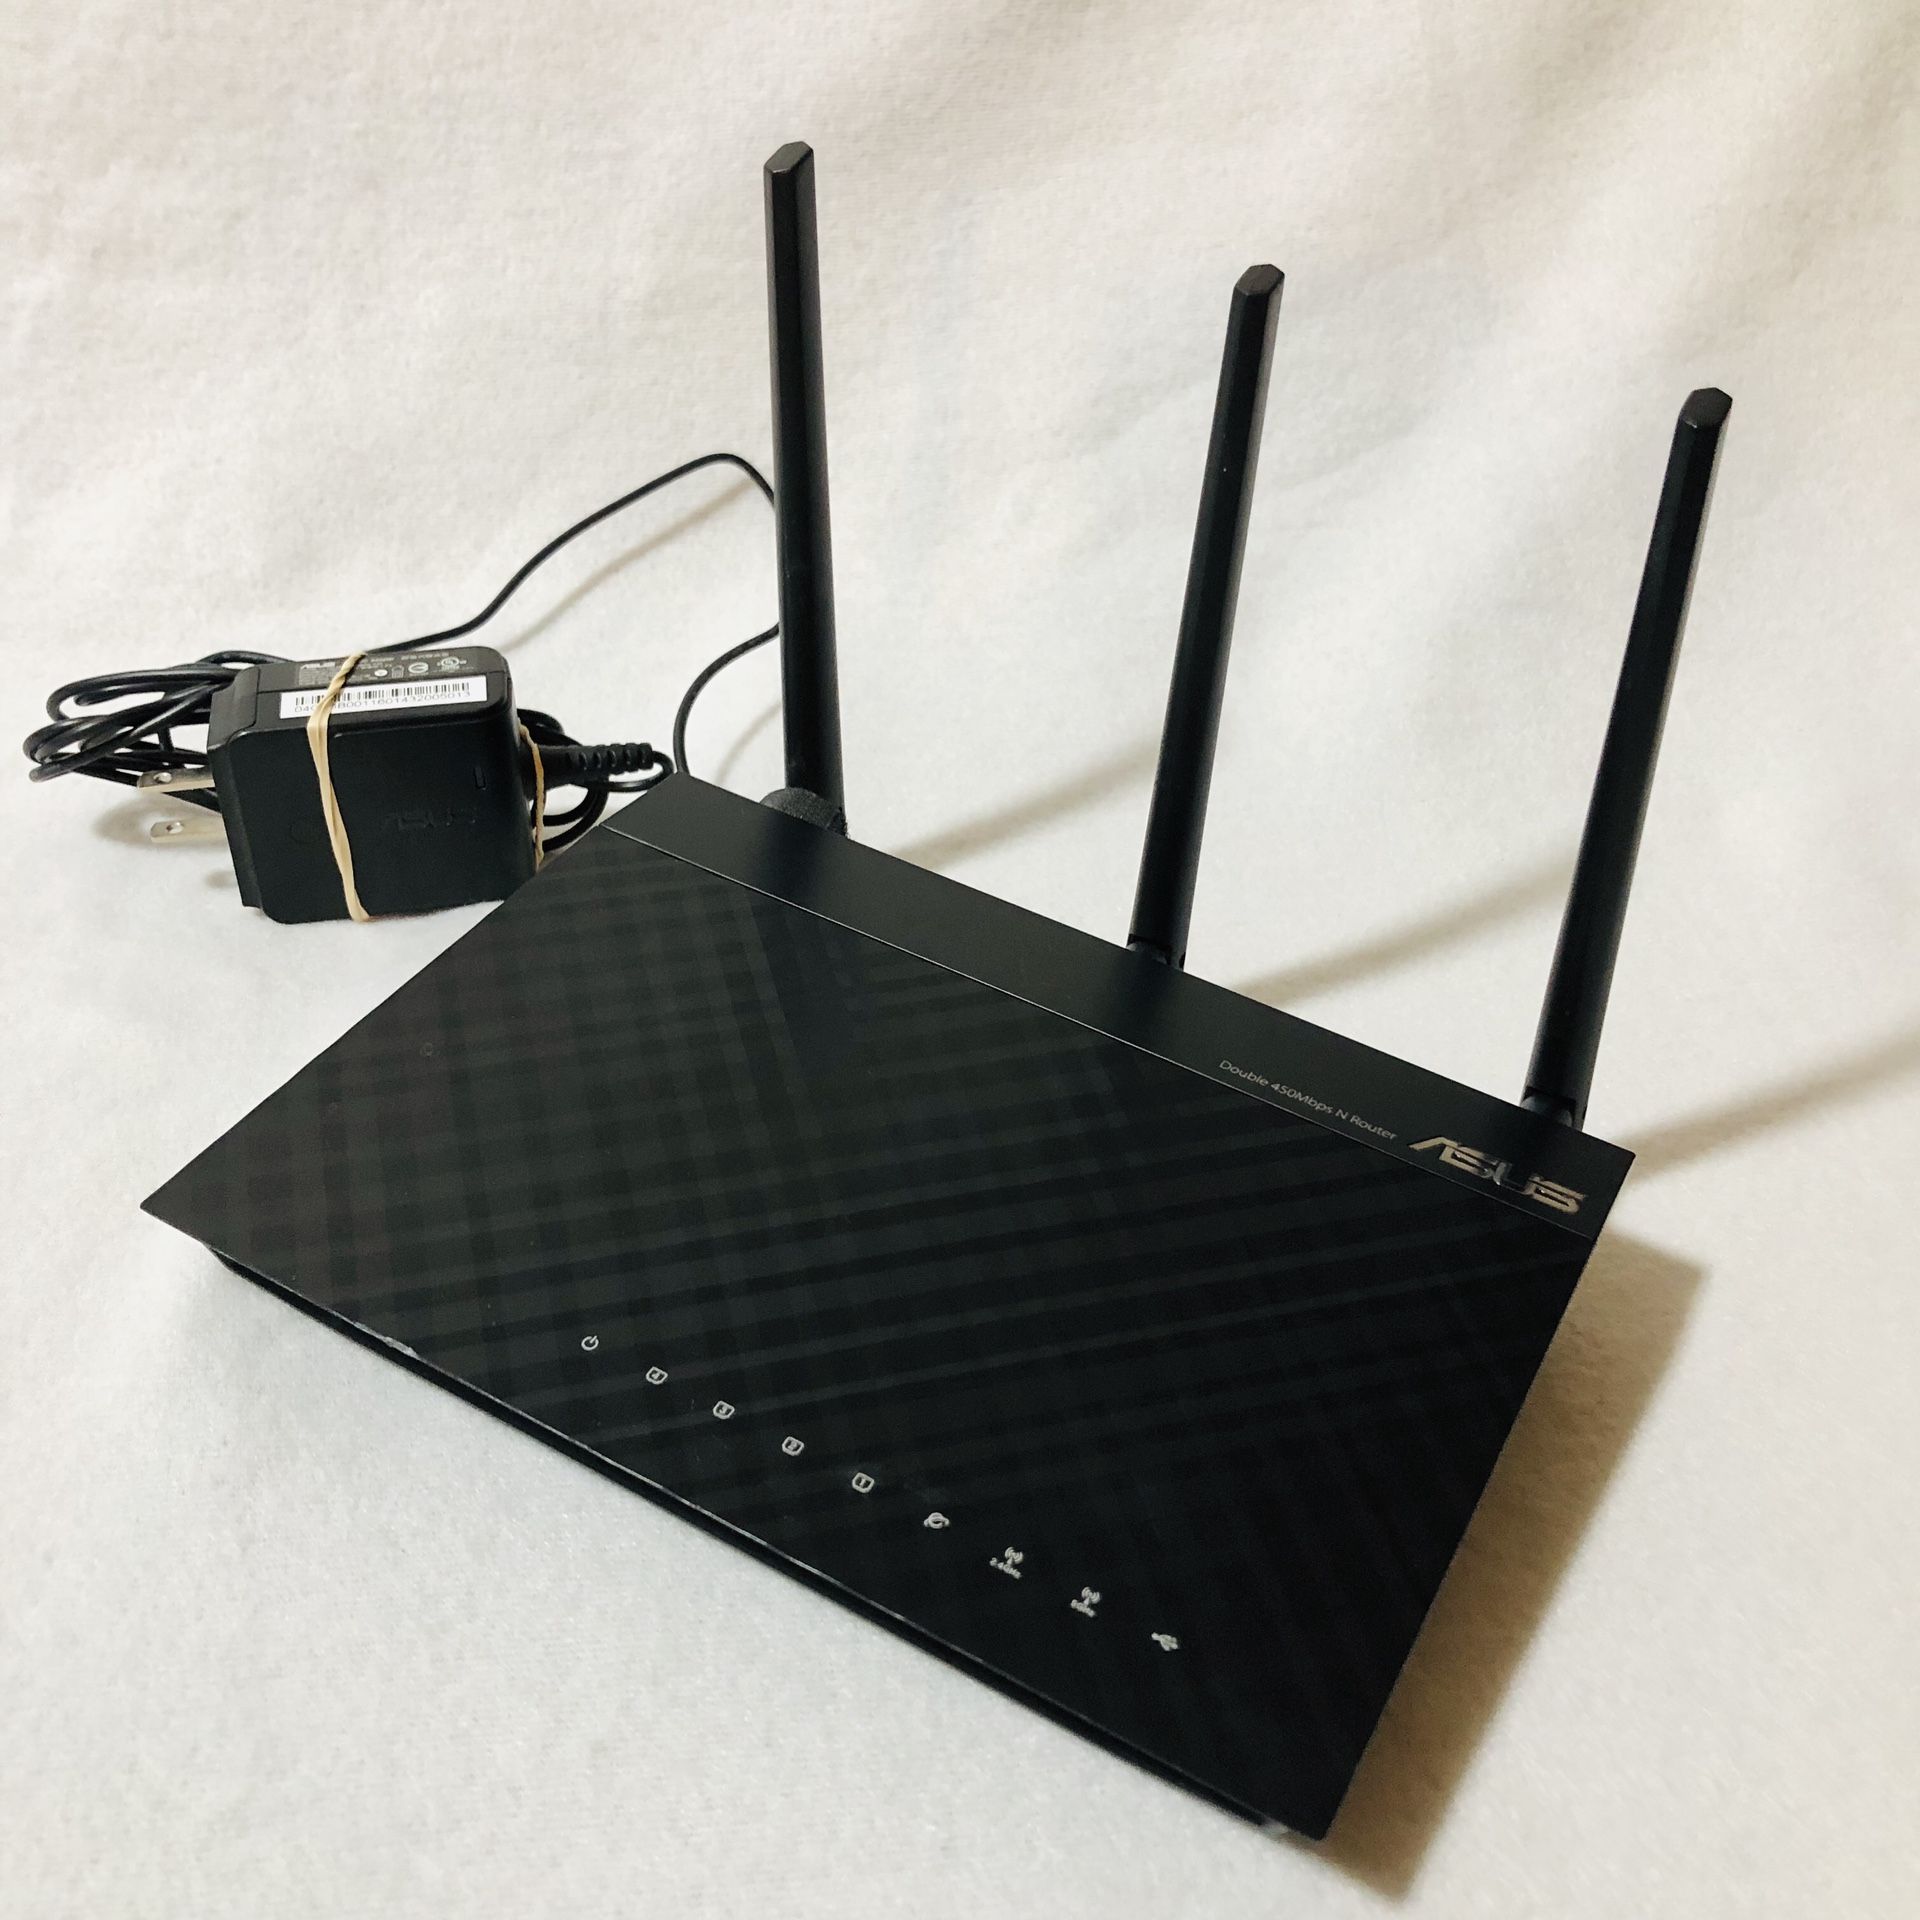 ASUS RT-N66R Gigabit router Dual-band wireless-N900 nighthawk Through Wall WiFi